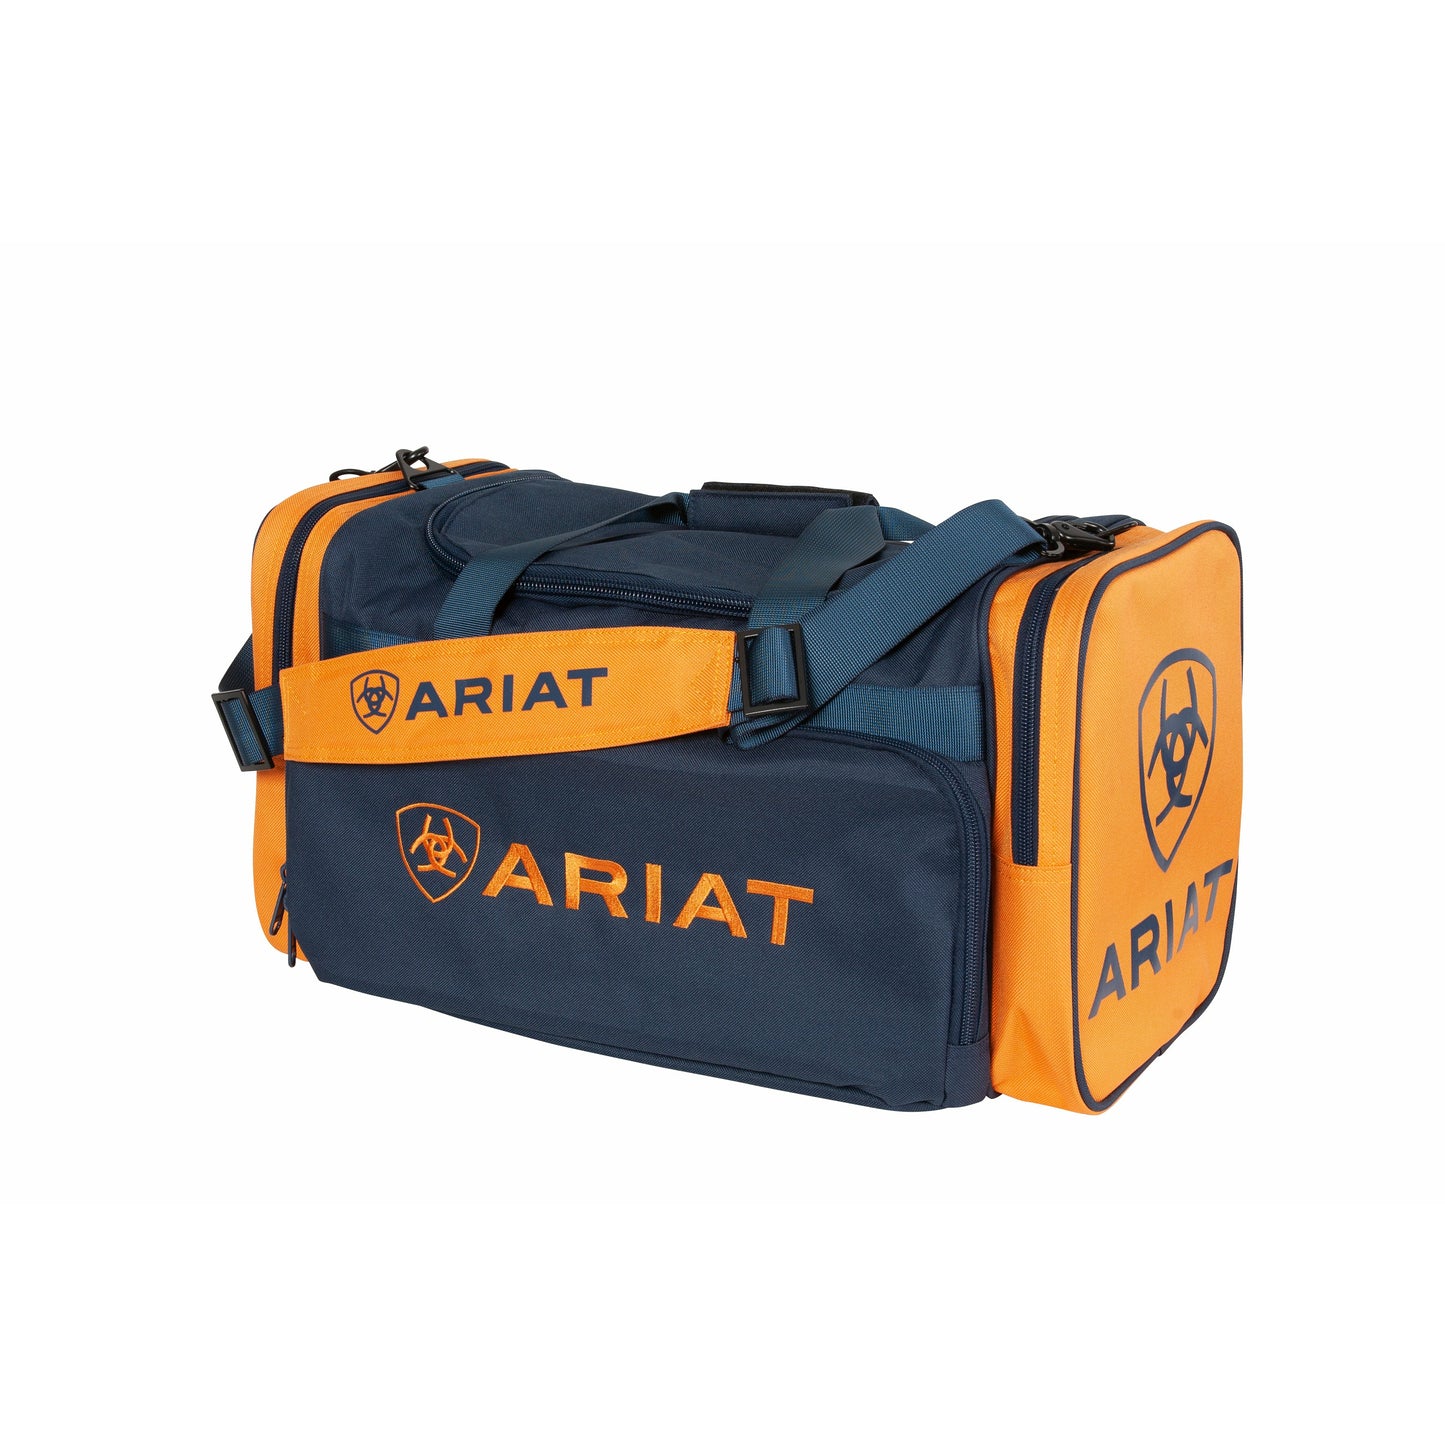 Ariat Junior Gear Bag Orange/Navy